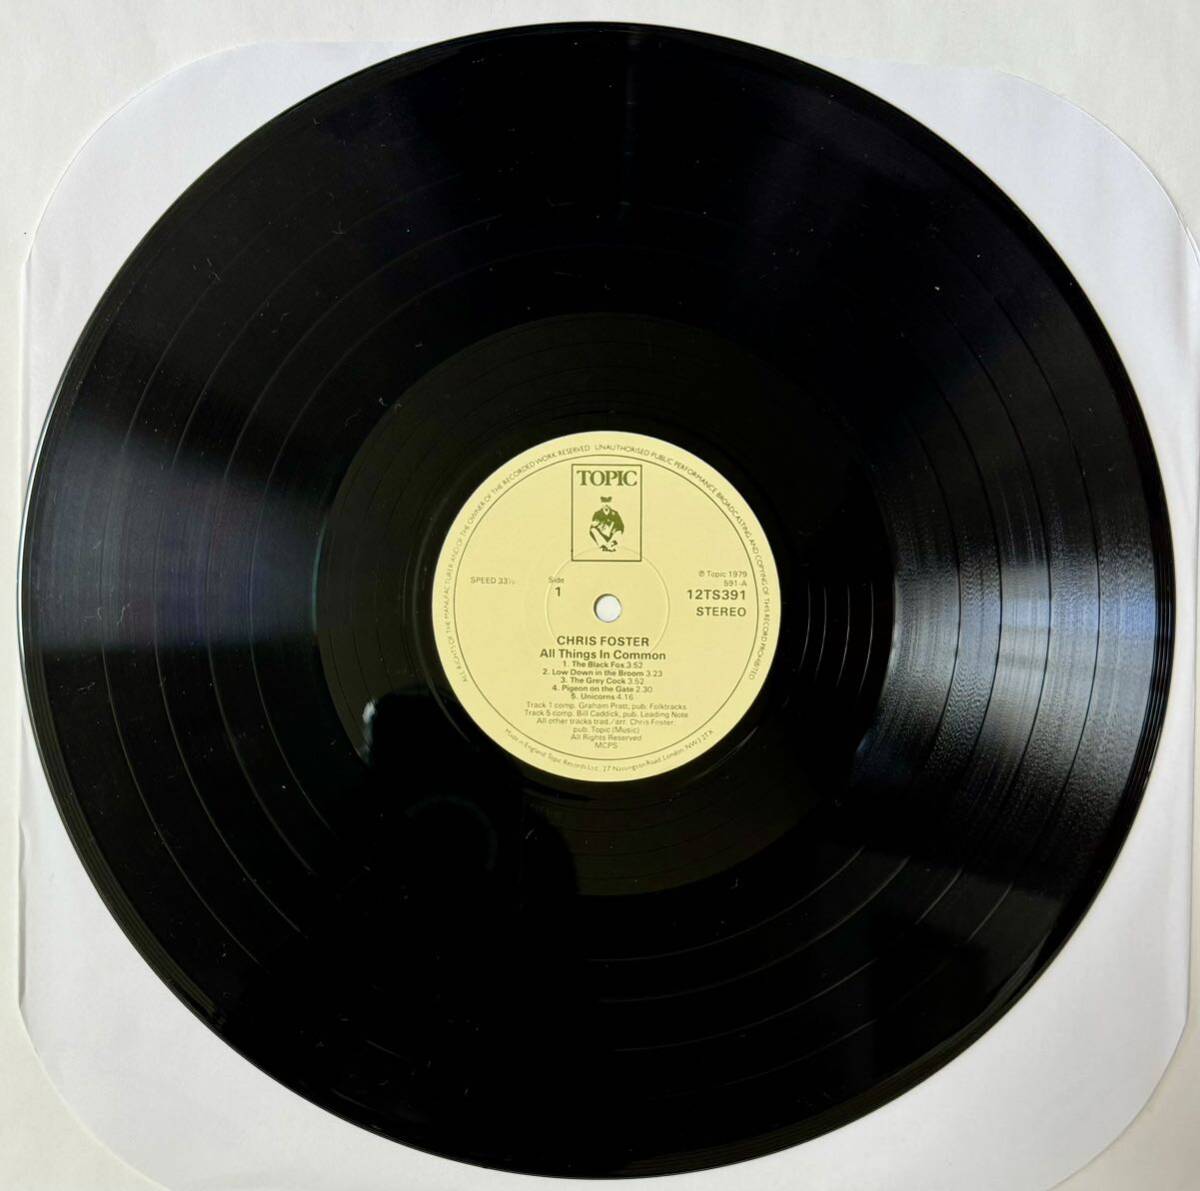 Chris Foster All Things In Common (1979) / UKフォーク / 英国フォーク / トラッド / プログレ/ FOLK / ROCK / UK オリジナル の画像3